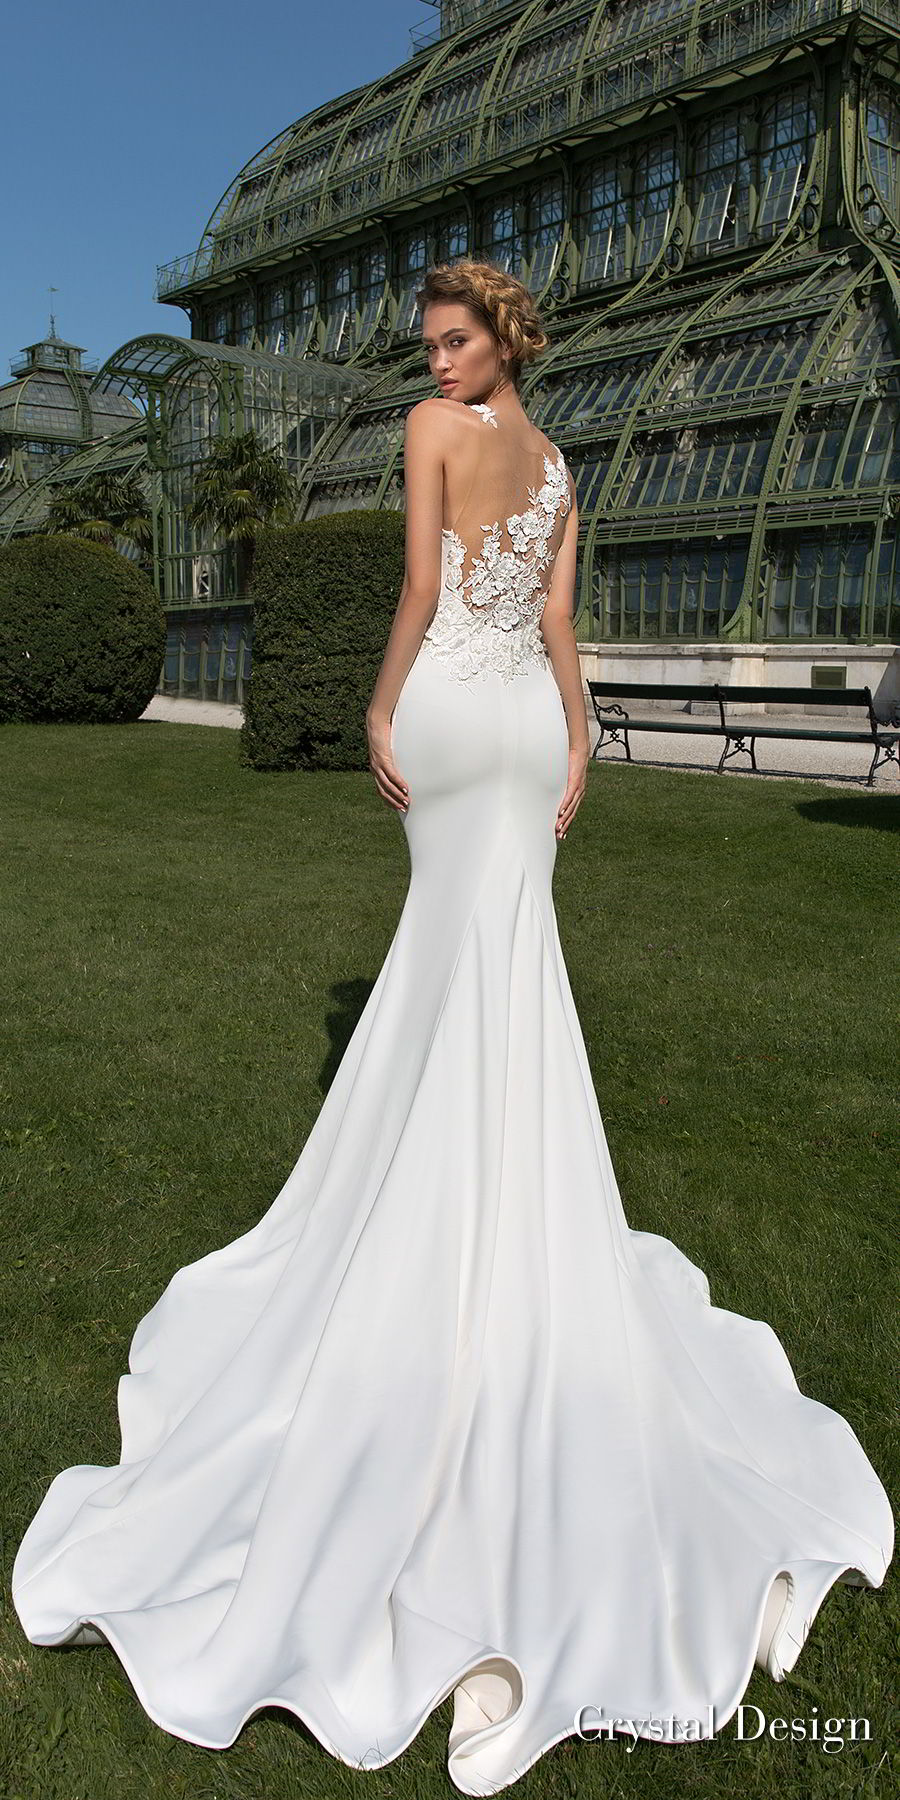 Buy Elegant Form Fitting Wedding Dresses In Stock